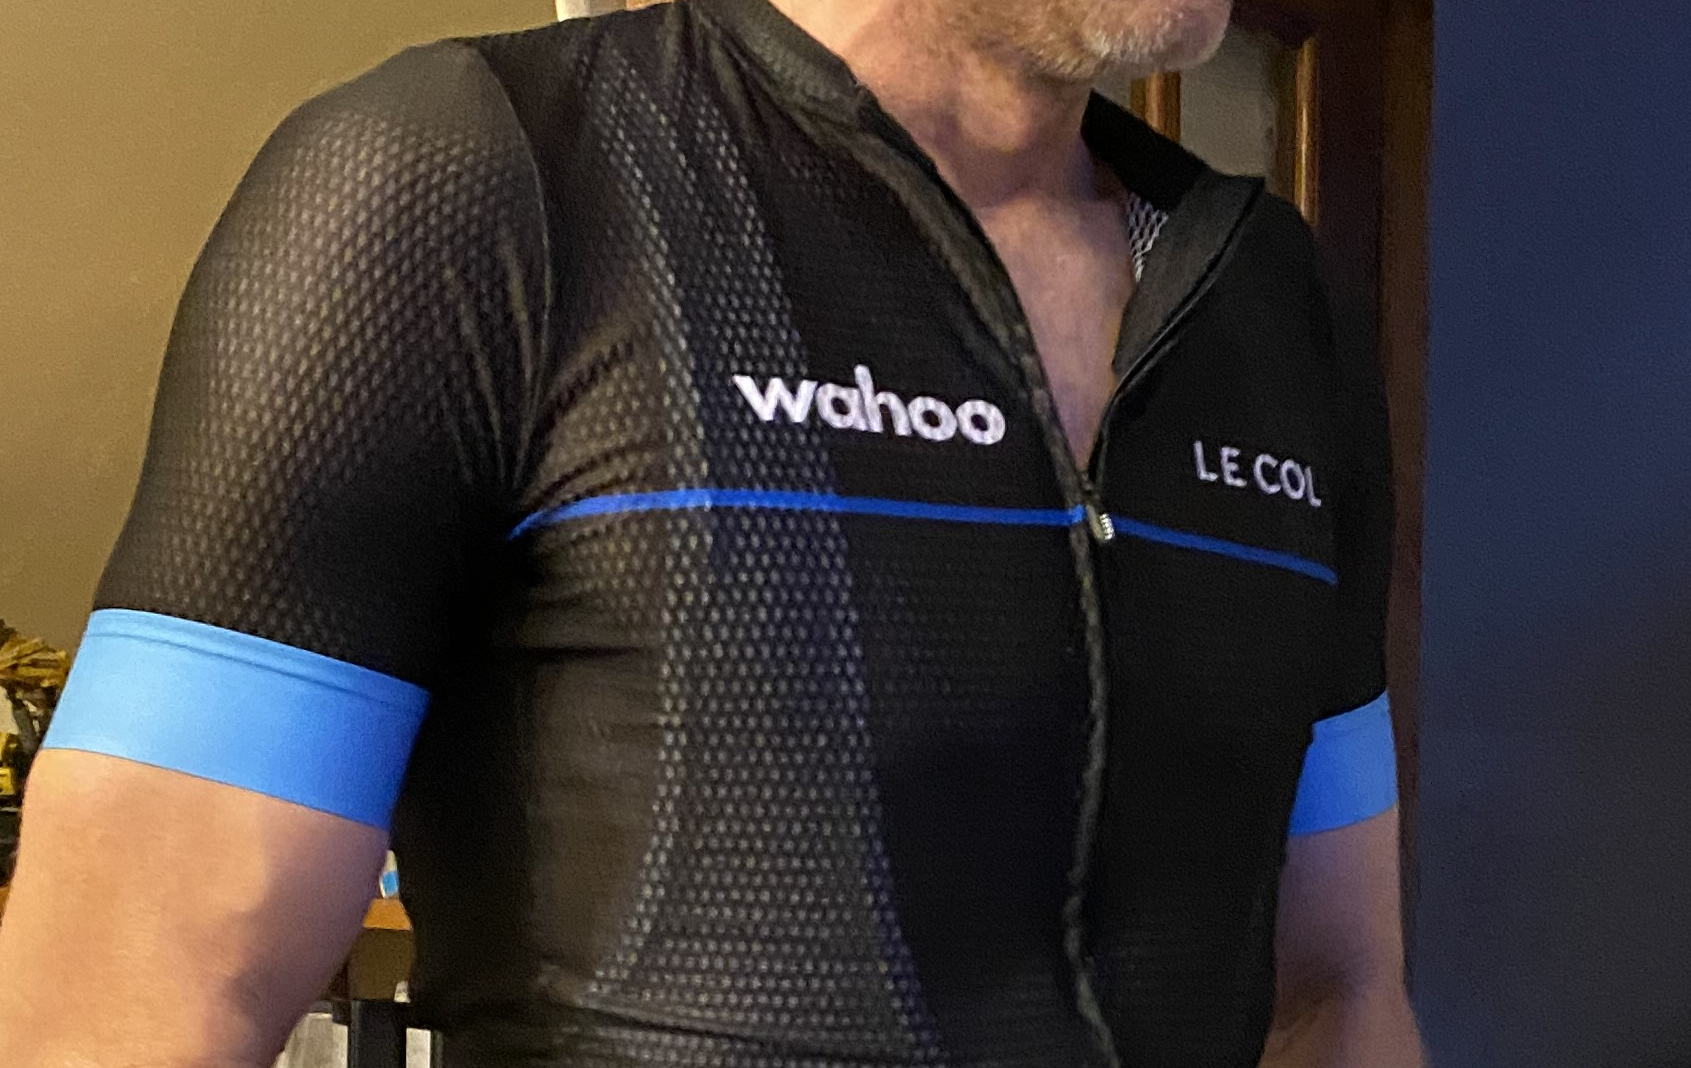 wahoo cycling jersey